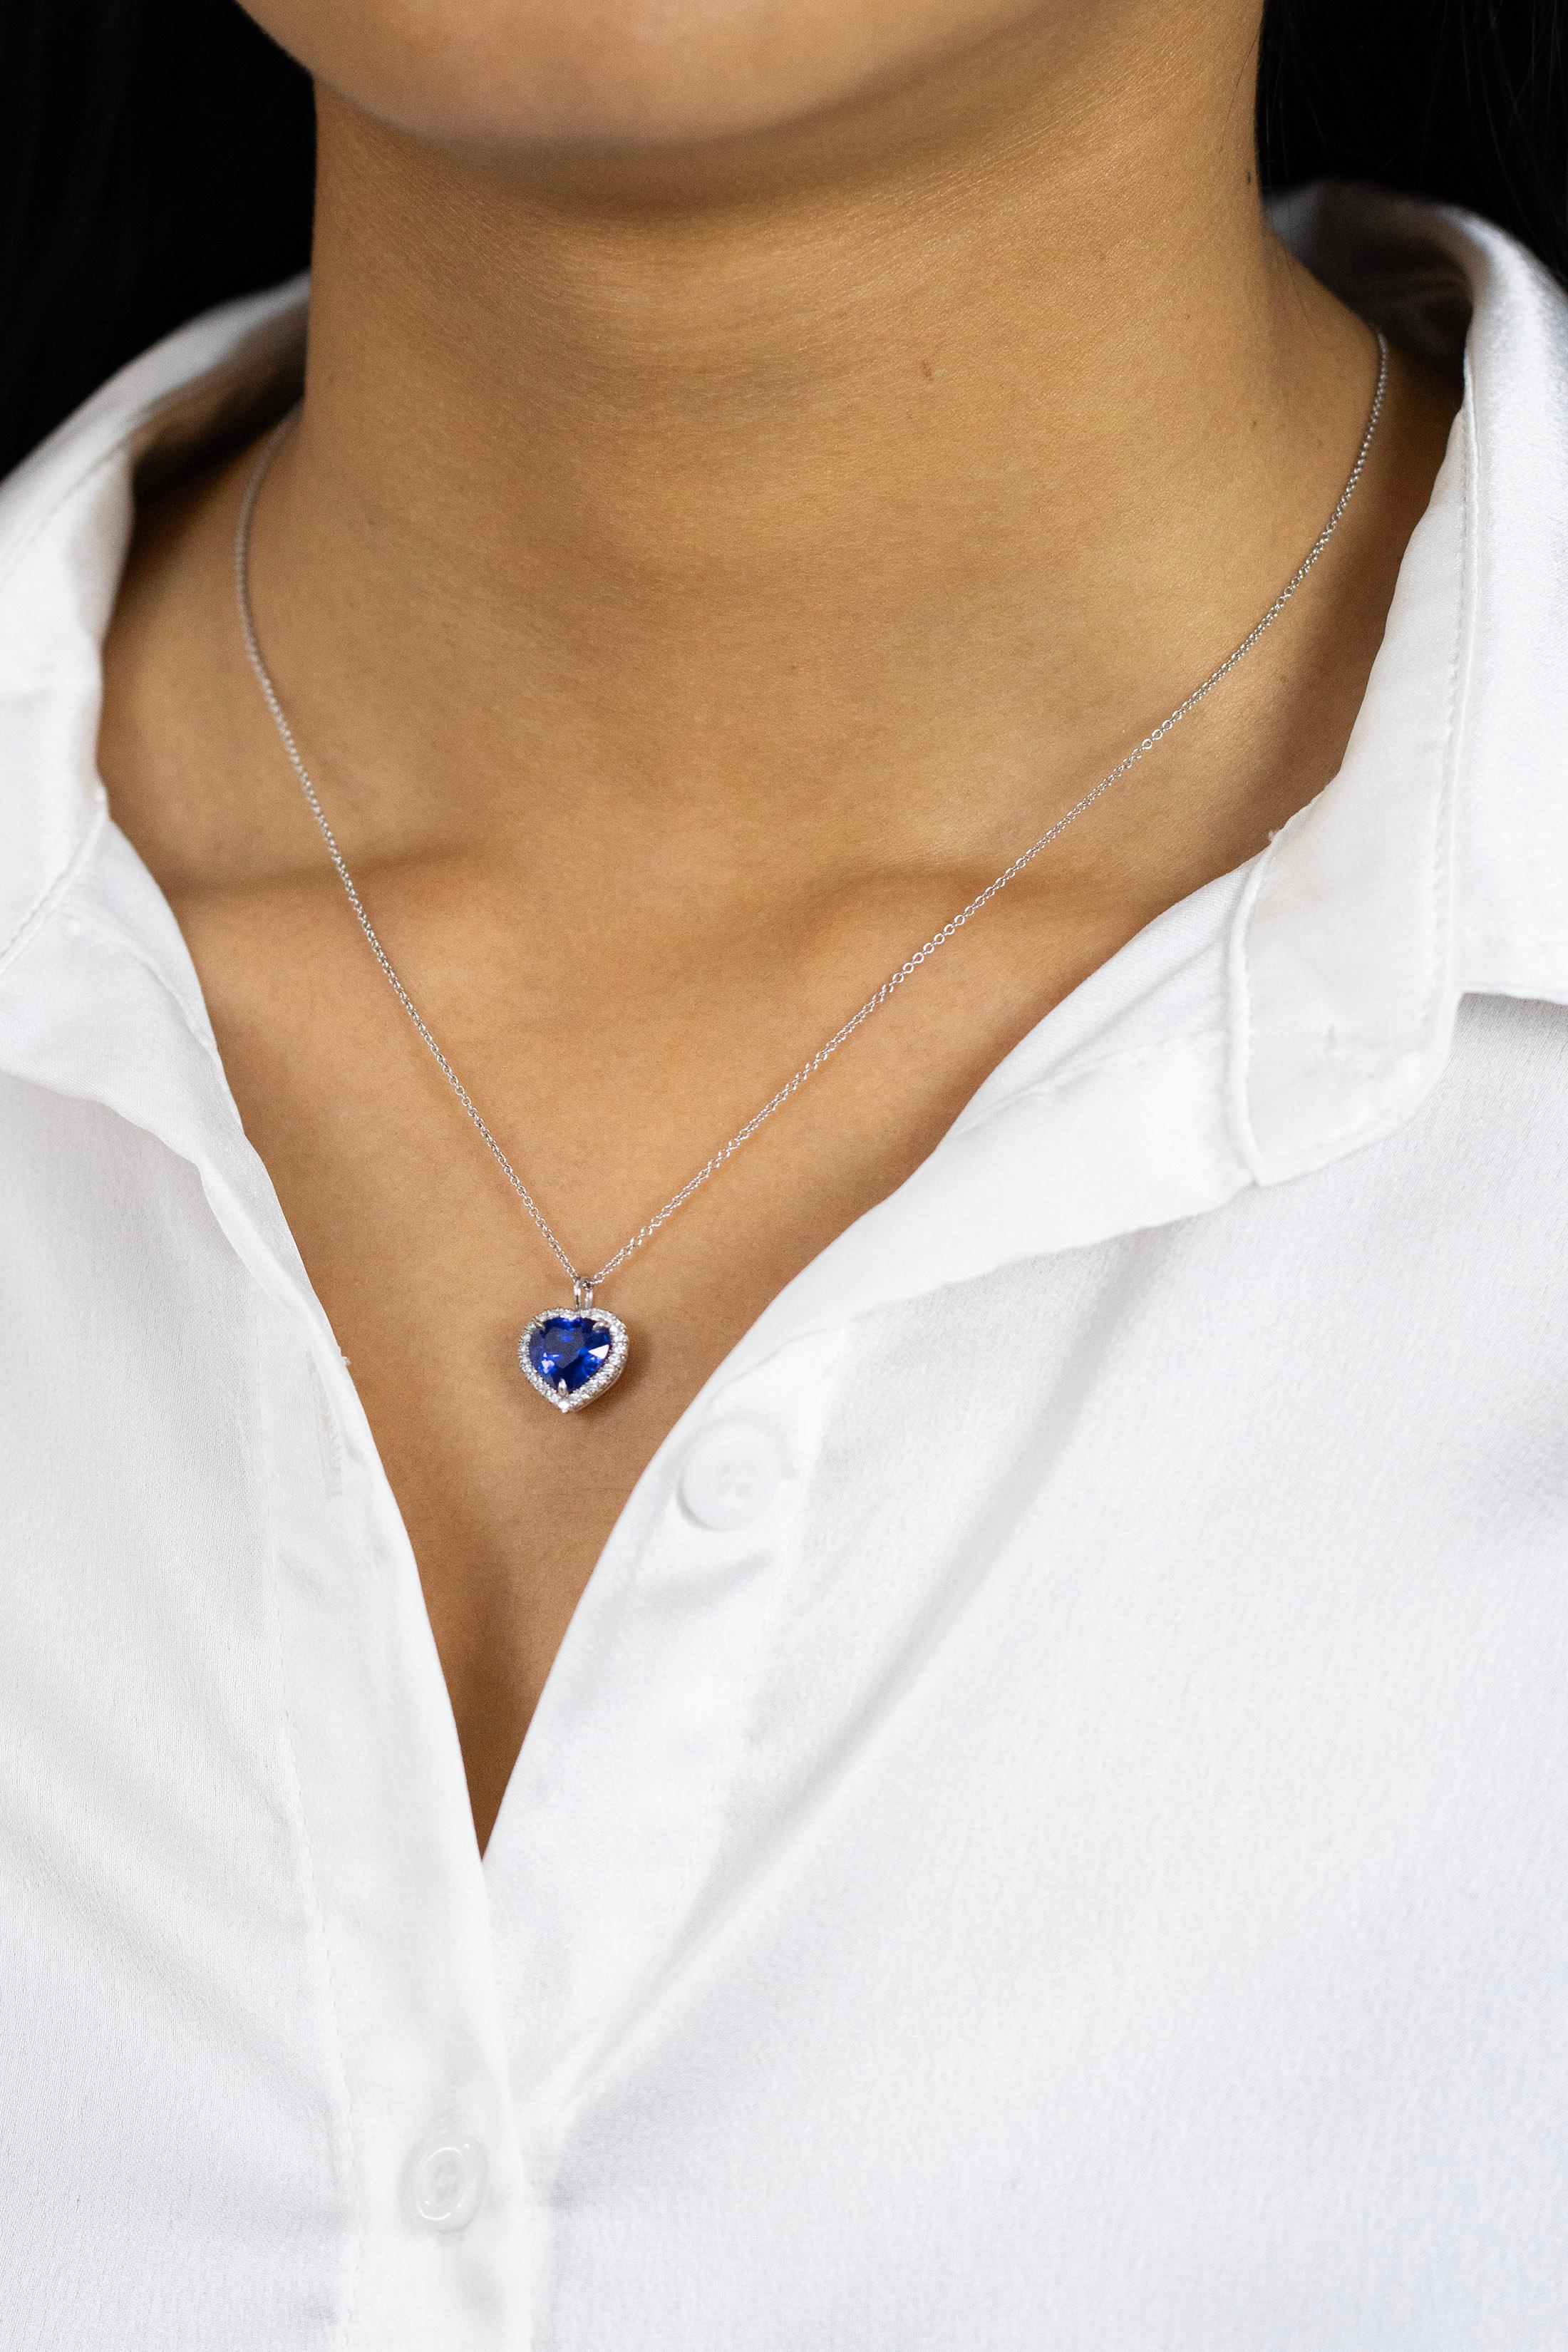 Heart Cut GIA Certified 2.58 Carat Heart Shape Blue Sapphire with Diamond Pendant Necklace For Sale